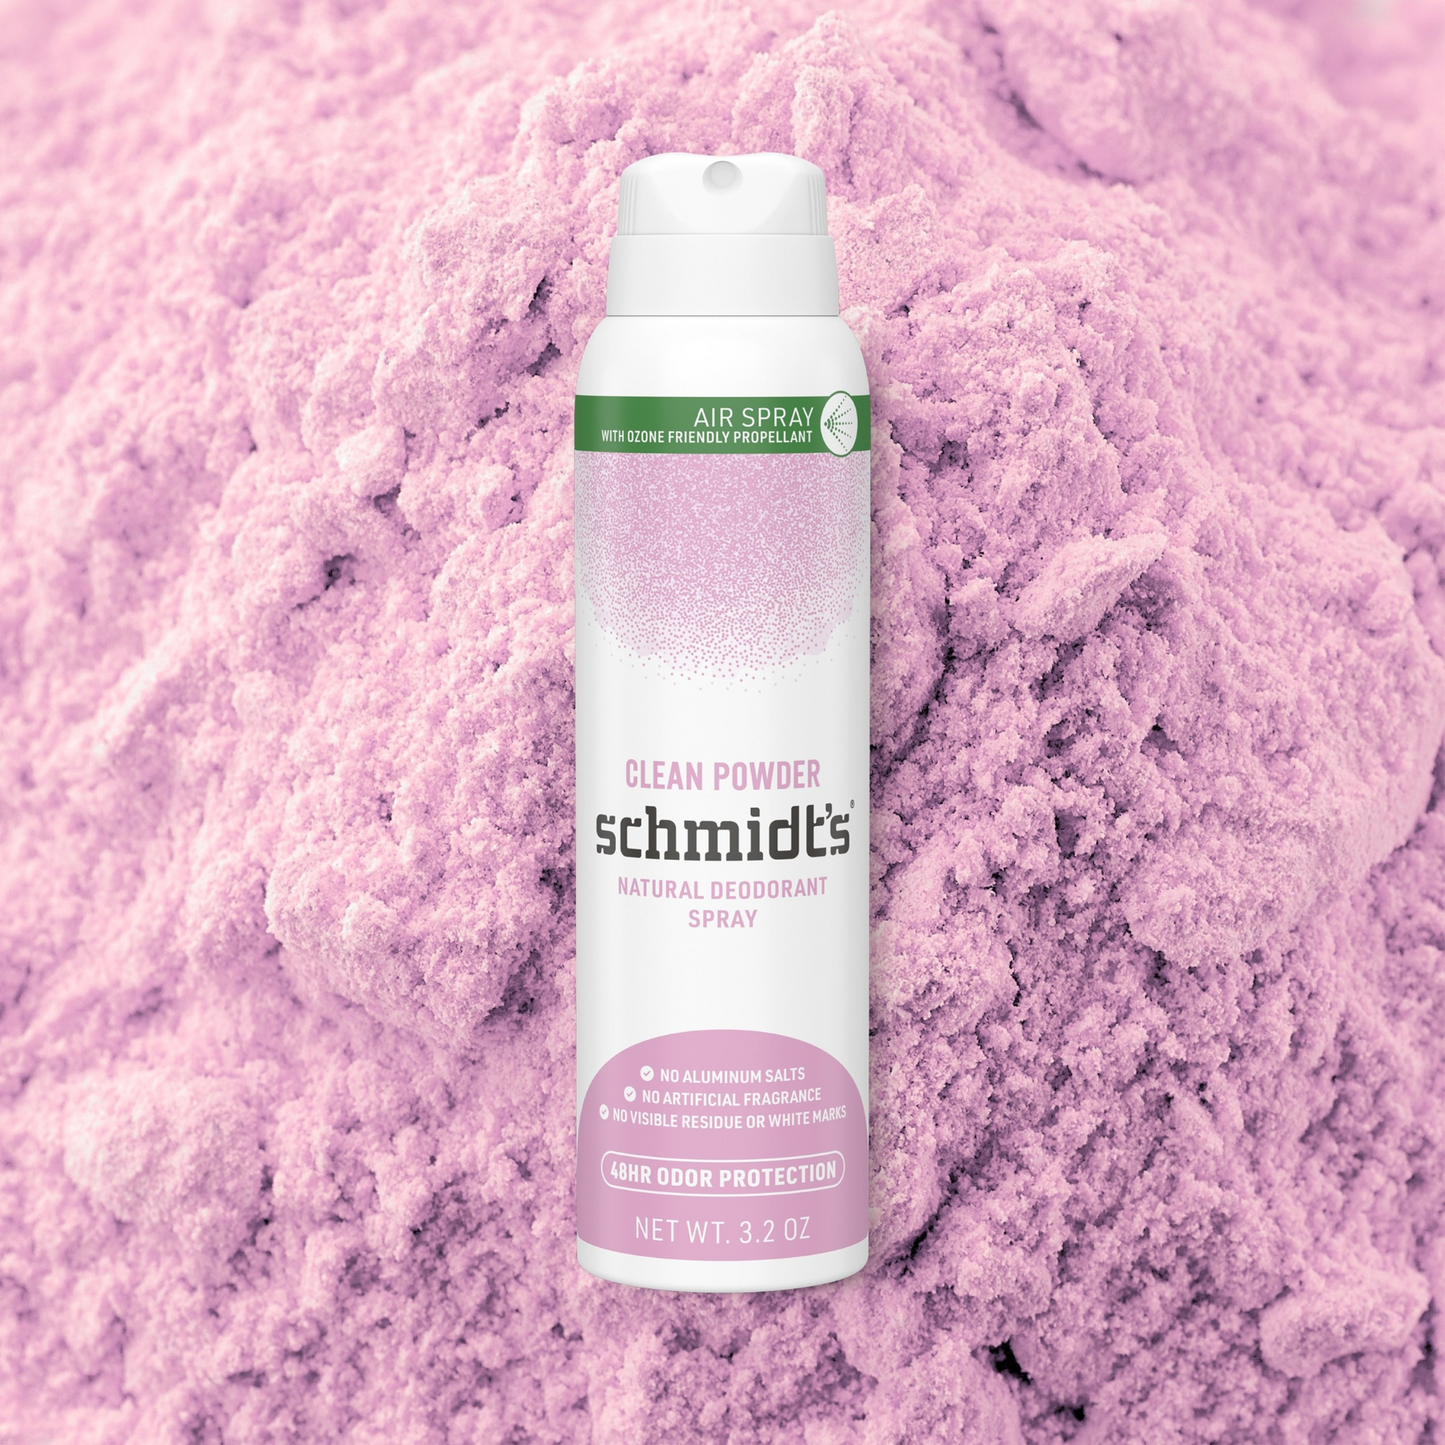 Schmidt's Spray Clean Powder Deodorant (3.2 oz) #10085622